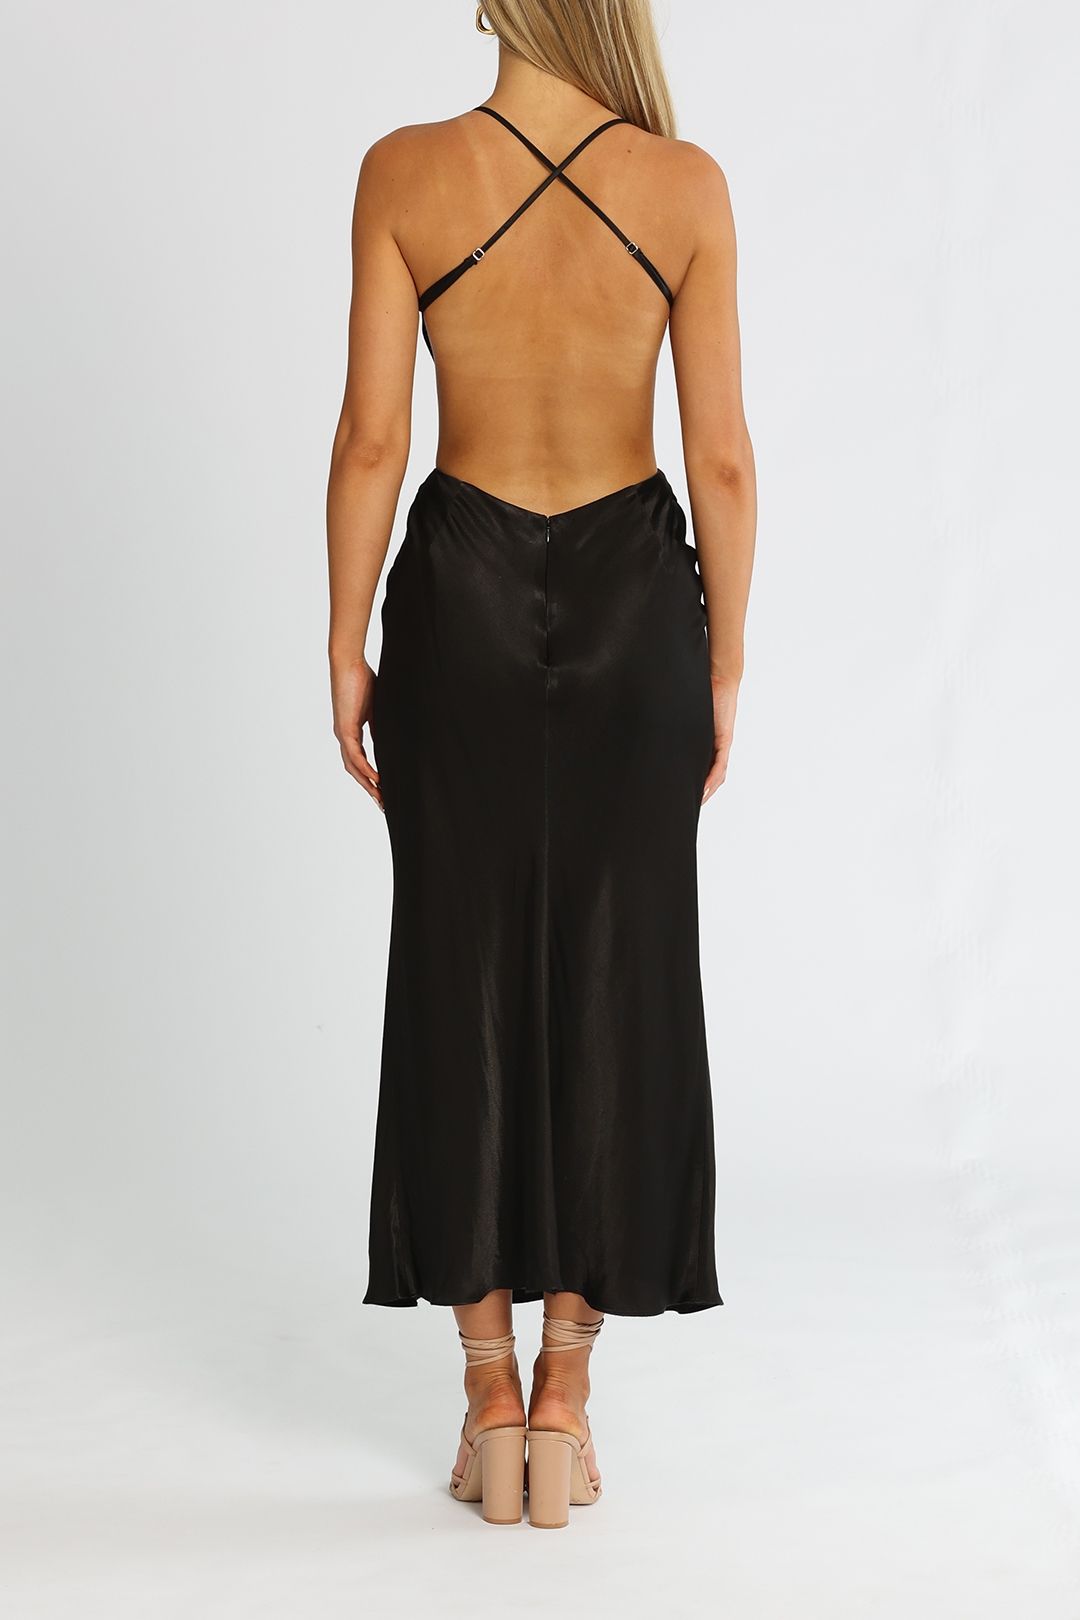 Shona Joy Thalia Bias Cut Out Midi Dress Black Backless